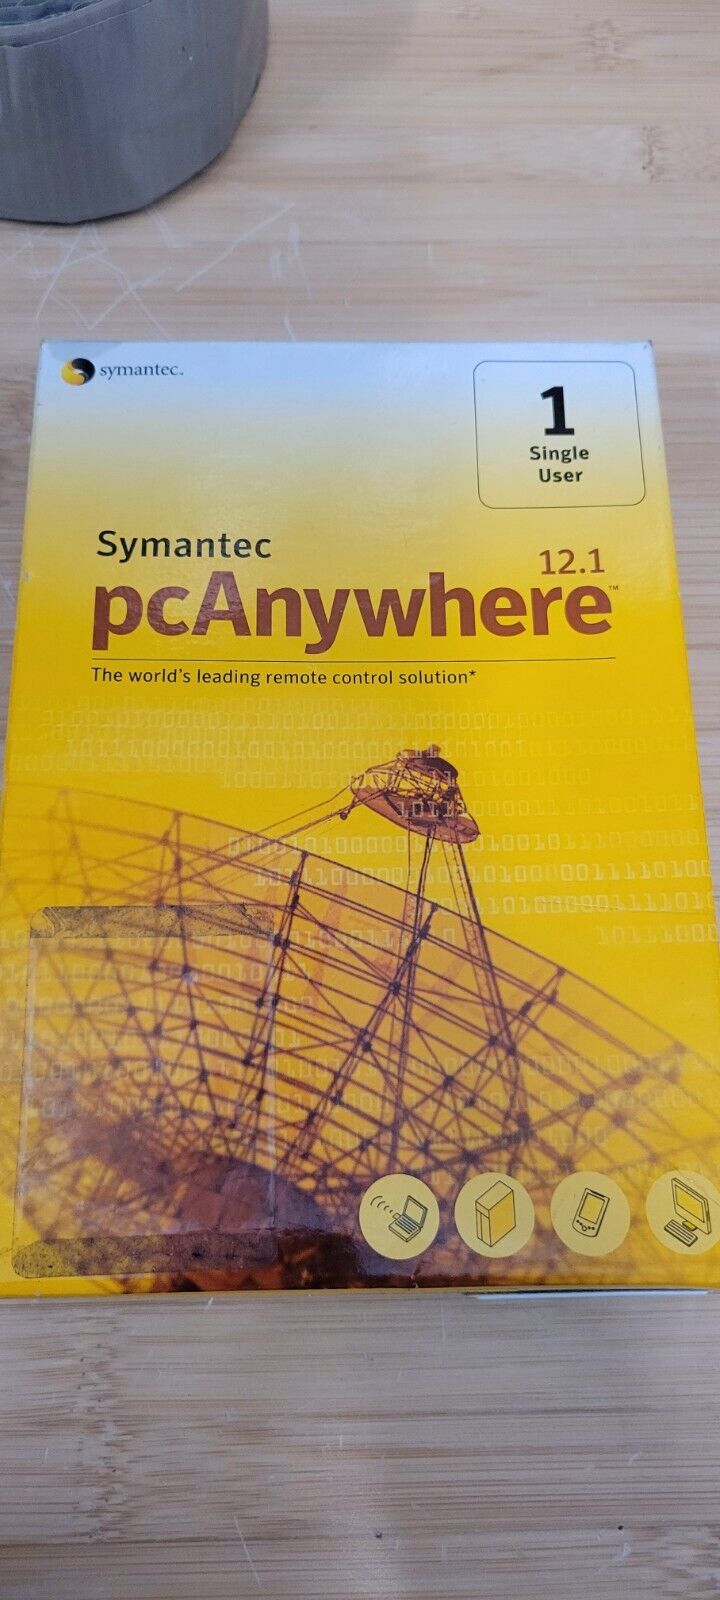 Symantec PCanywhere 12.1 remote access server 1 user